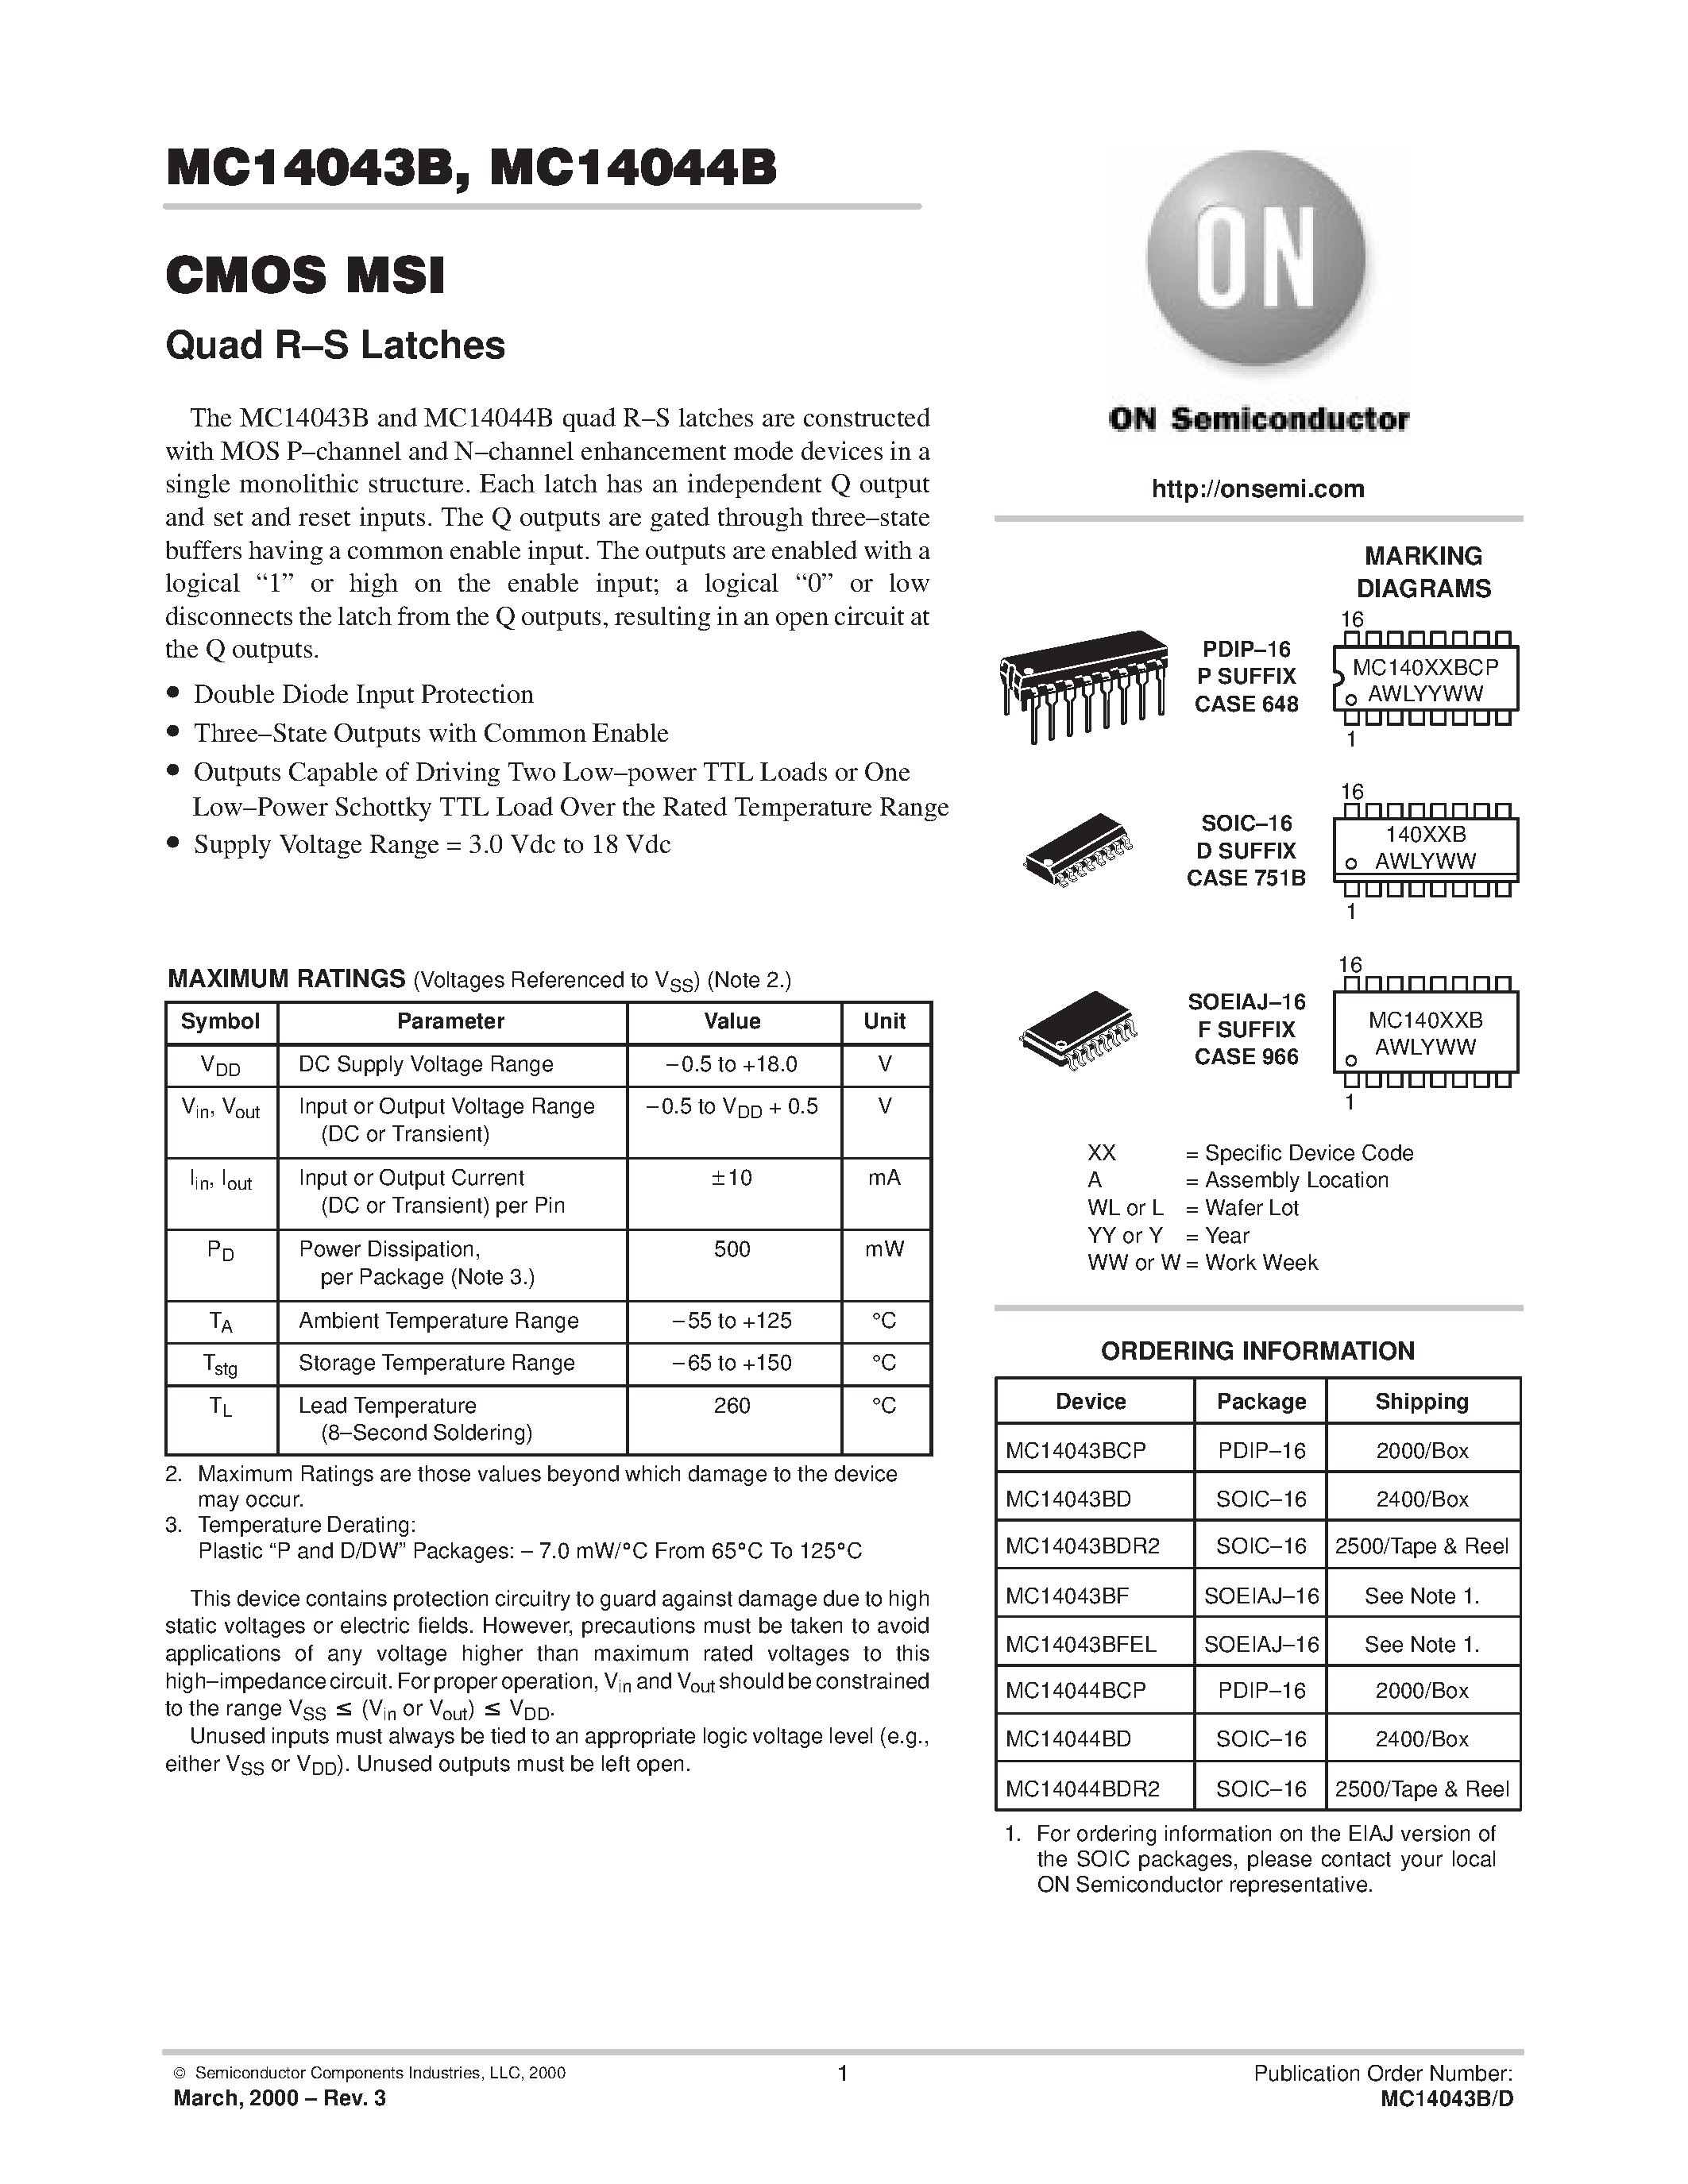 Datasheet MC14044BDR2 - CMOS MSI(Quad R-S Latches) page 1